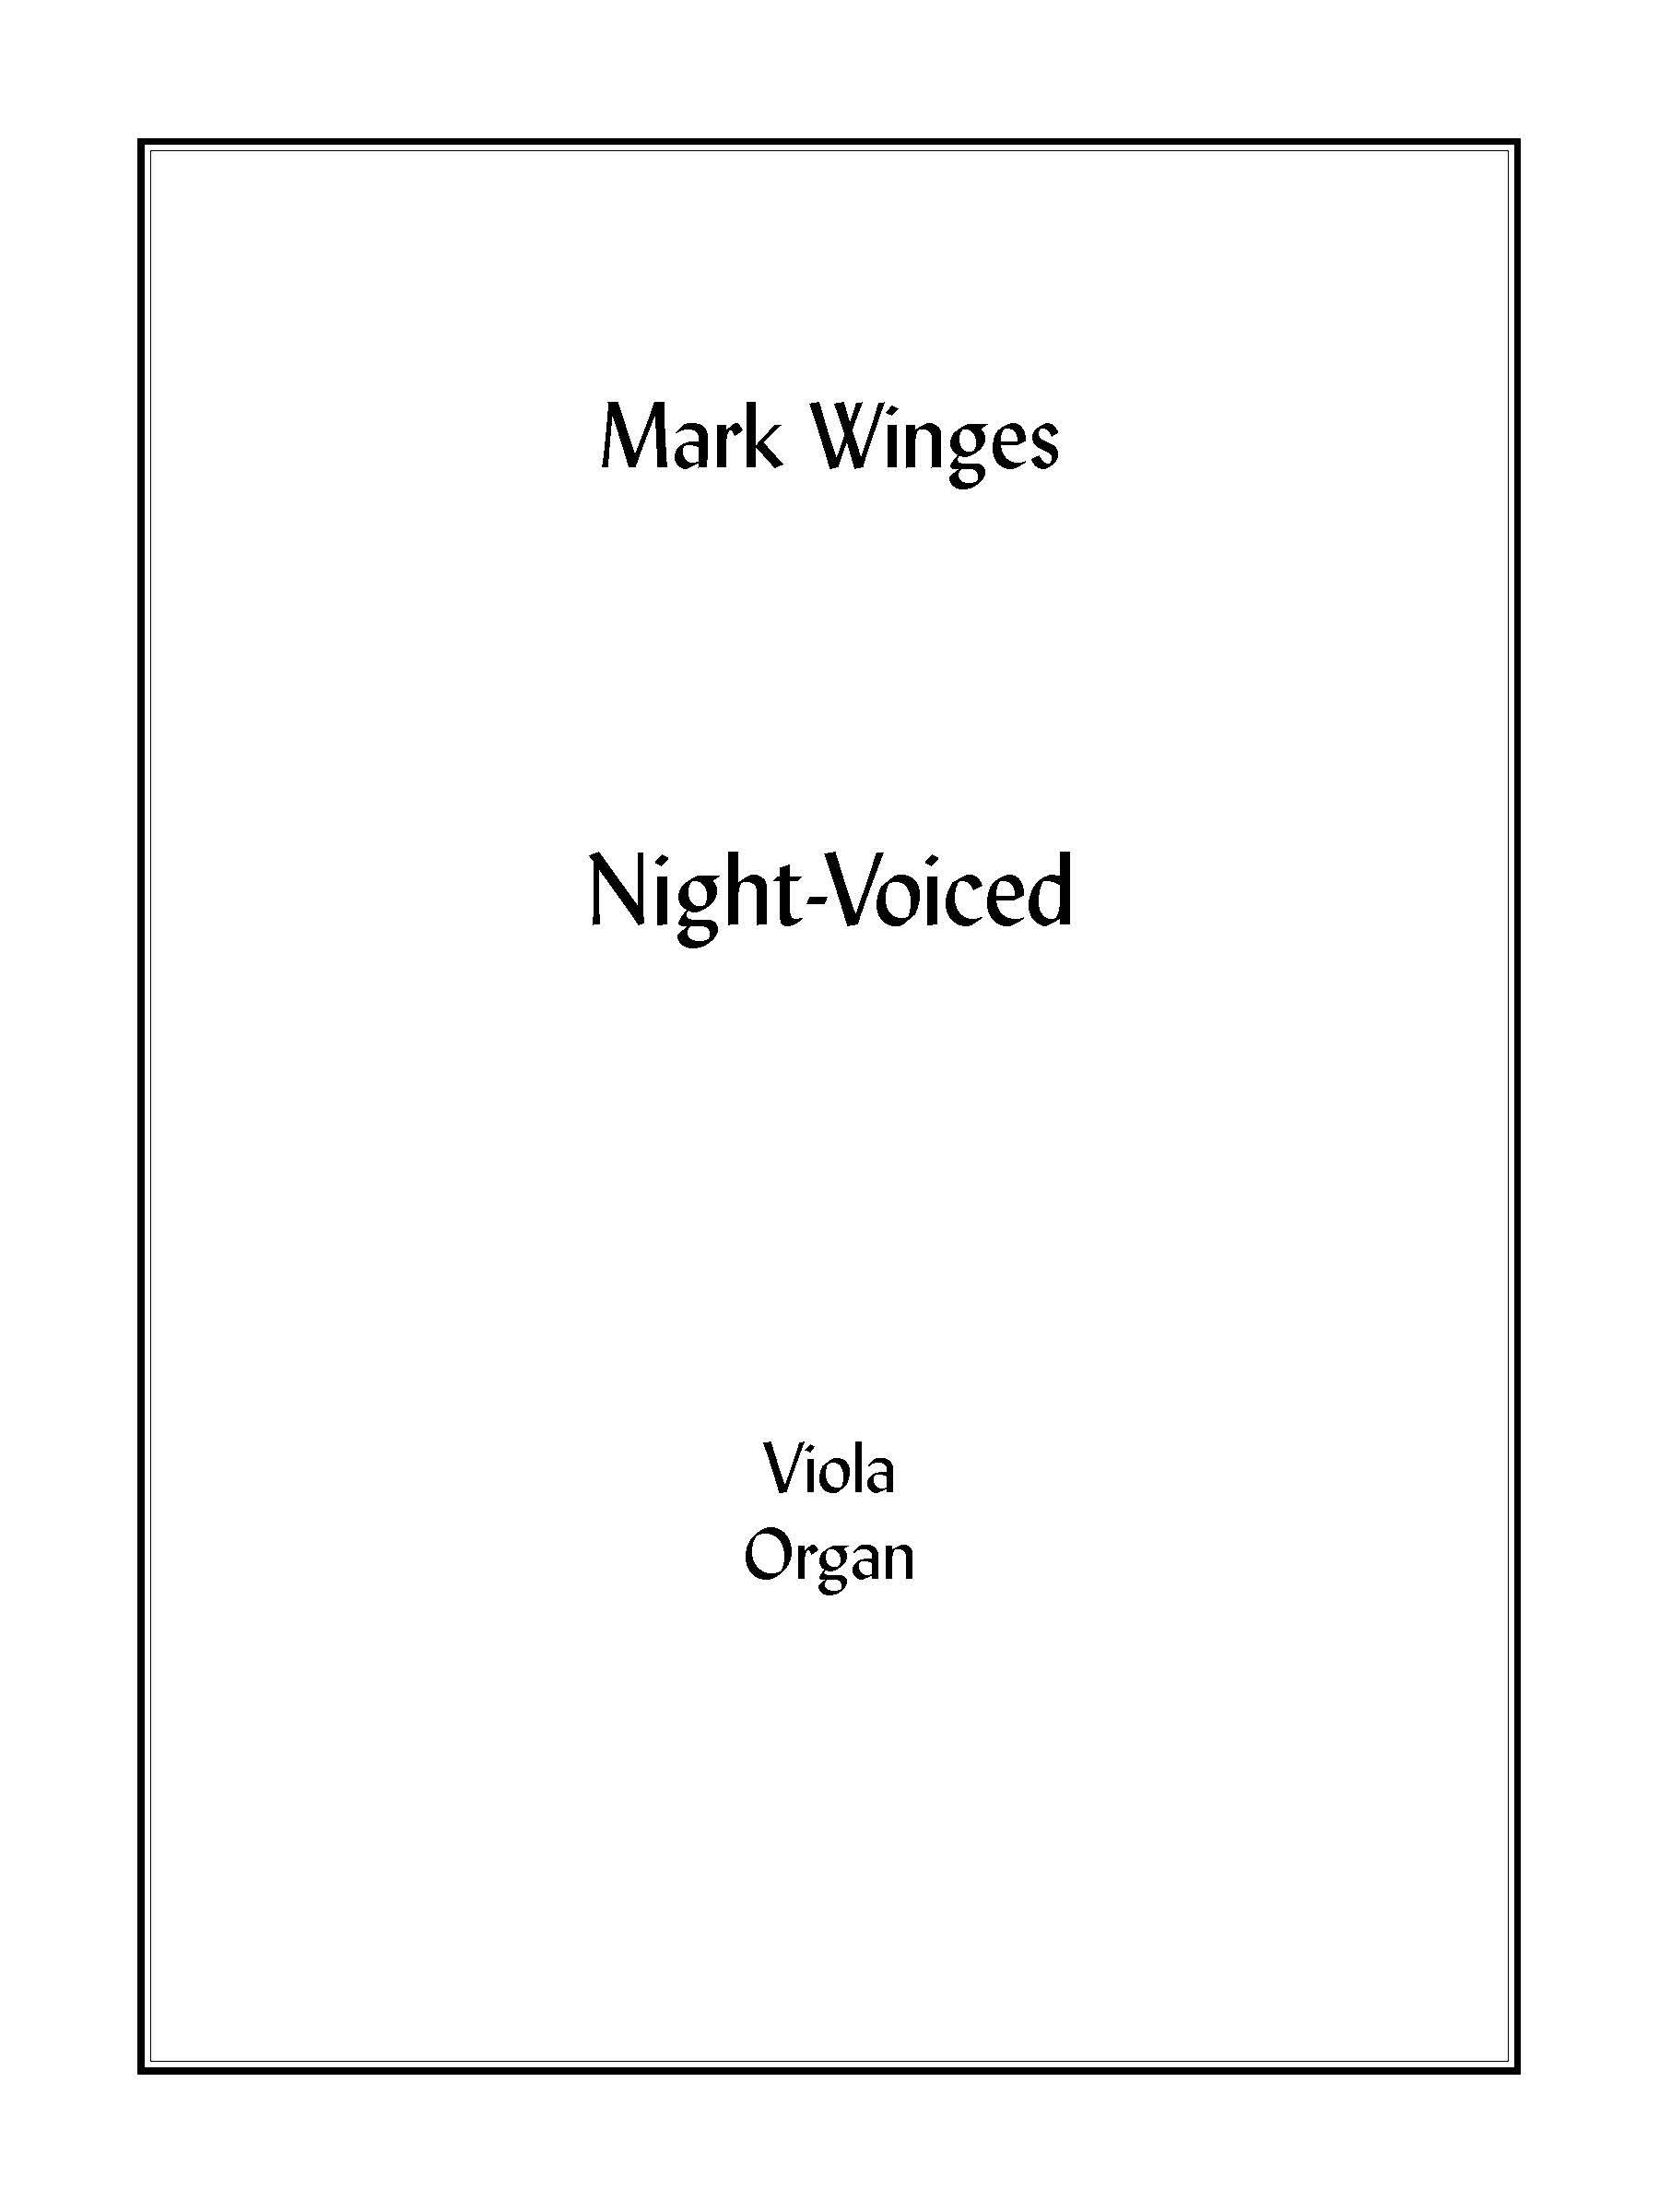 Night-Voiced (organ version) for Viola & Organ